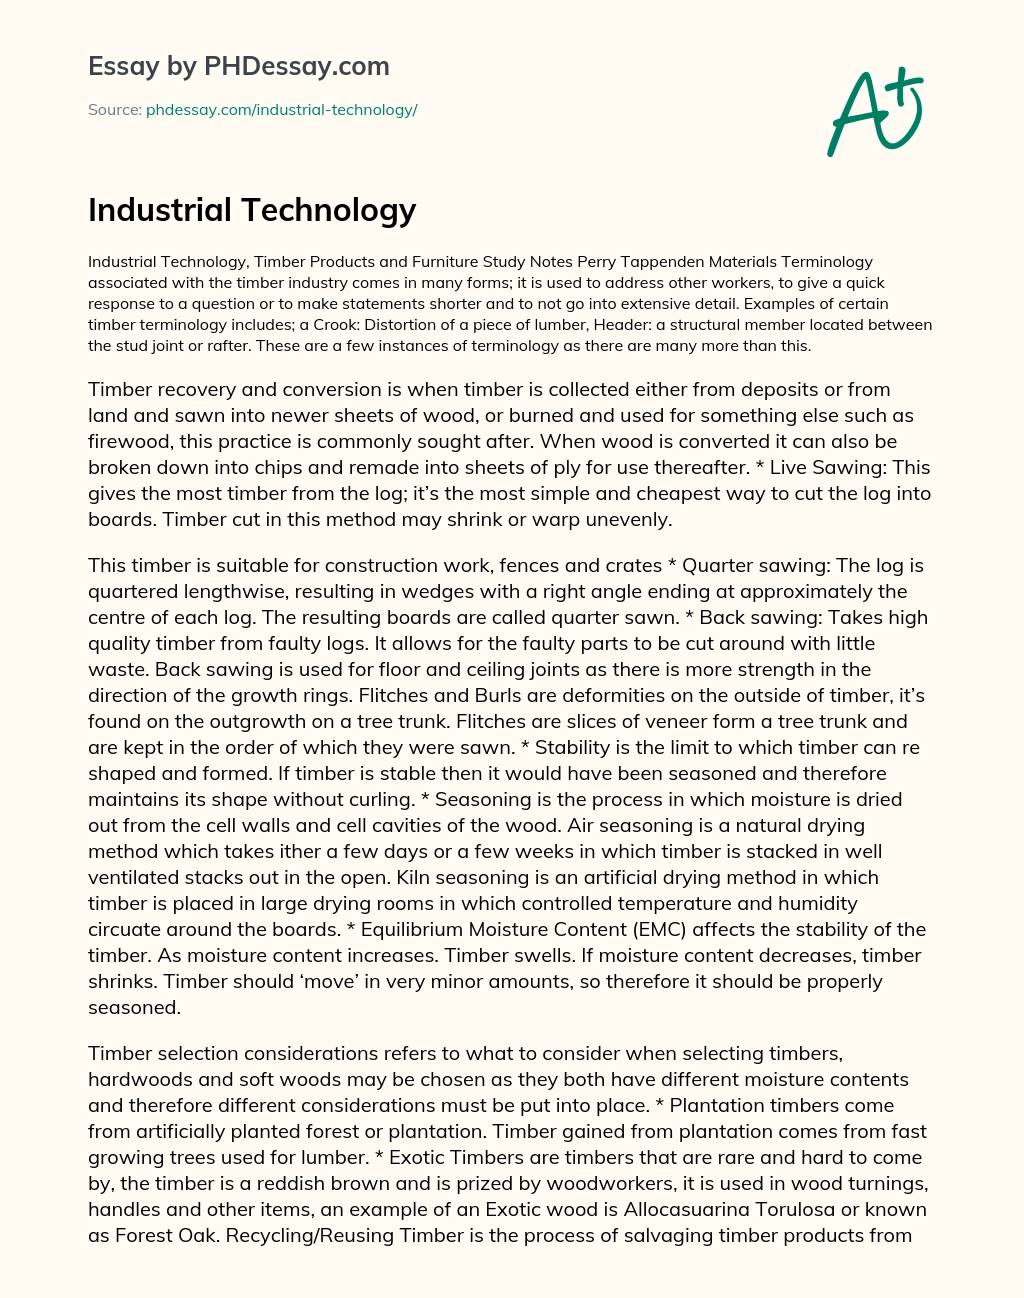 Industrial Technology essay